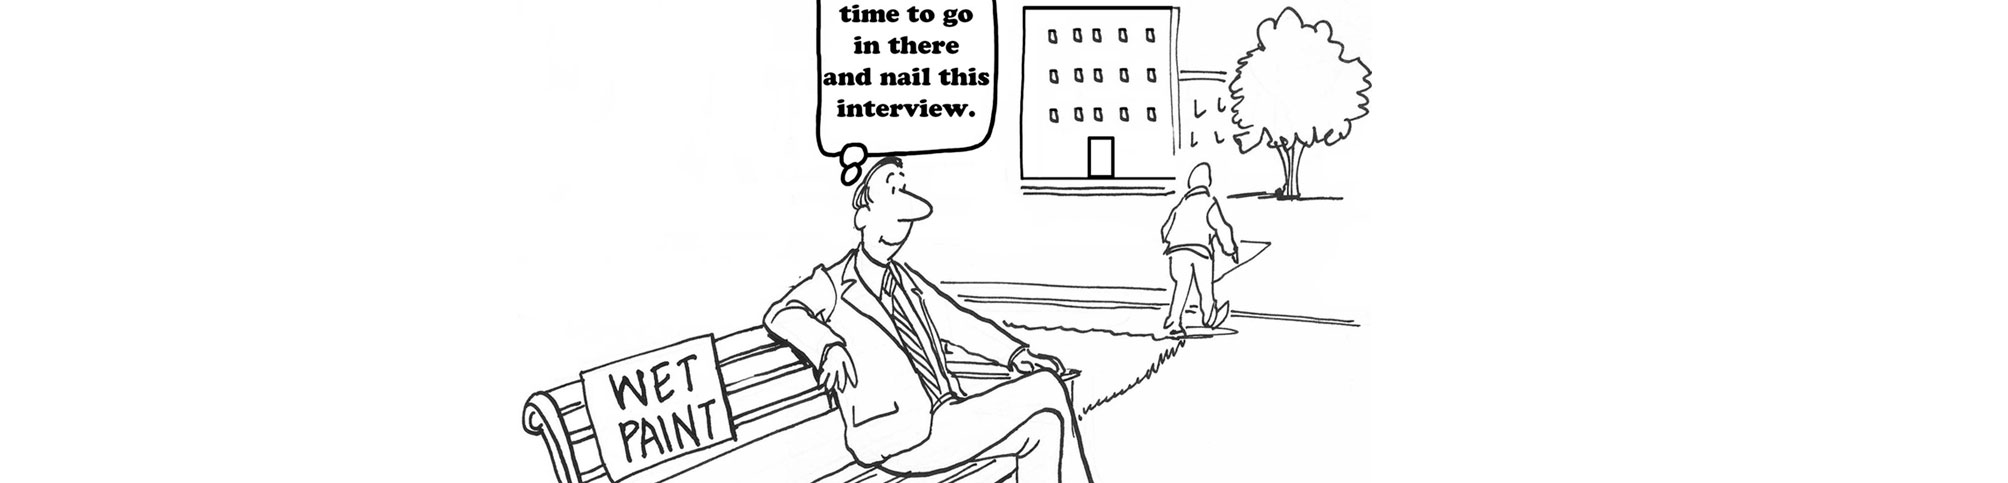 "interviewing job"